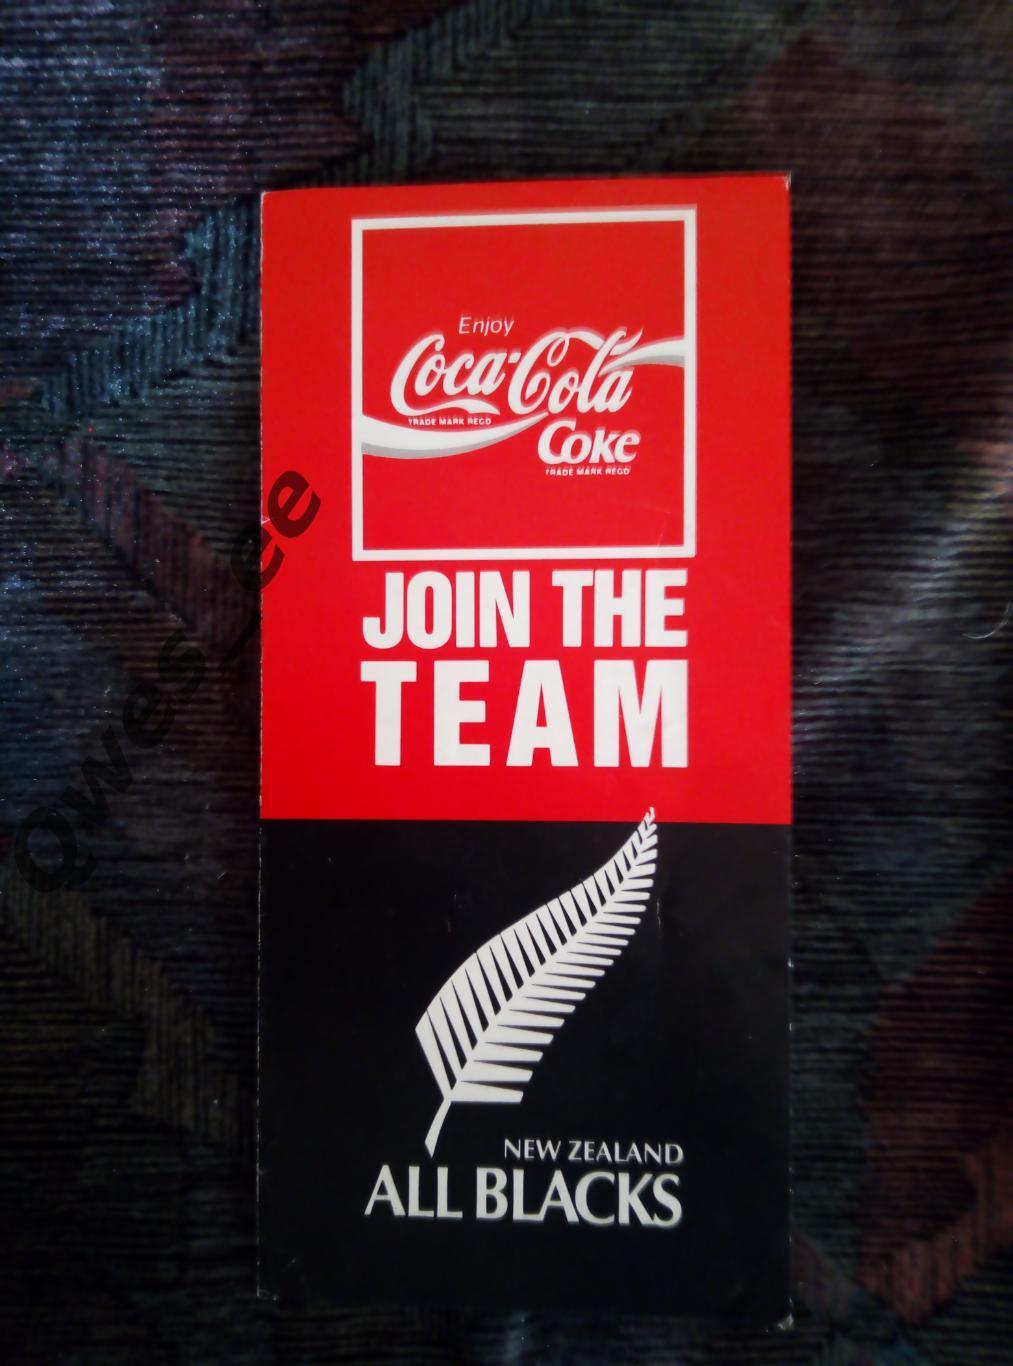 Регби Join the team New Zealand All Blacks Новая Зеландия автографы